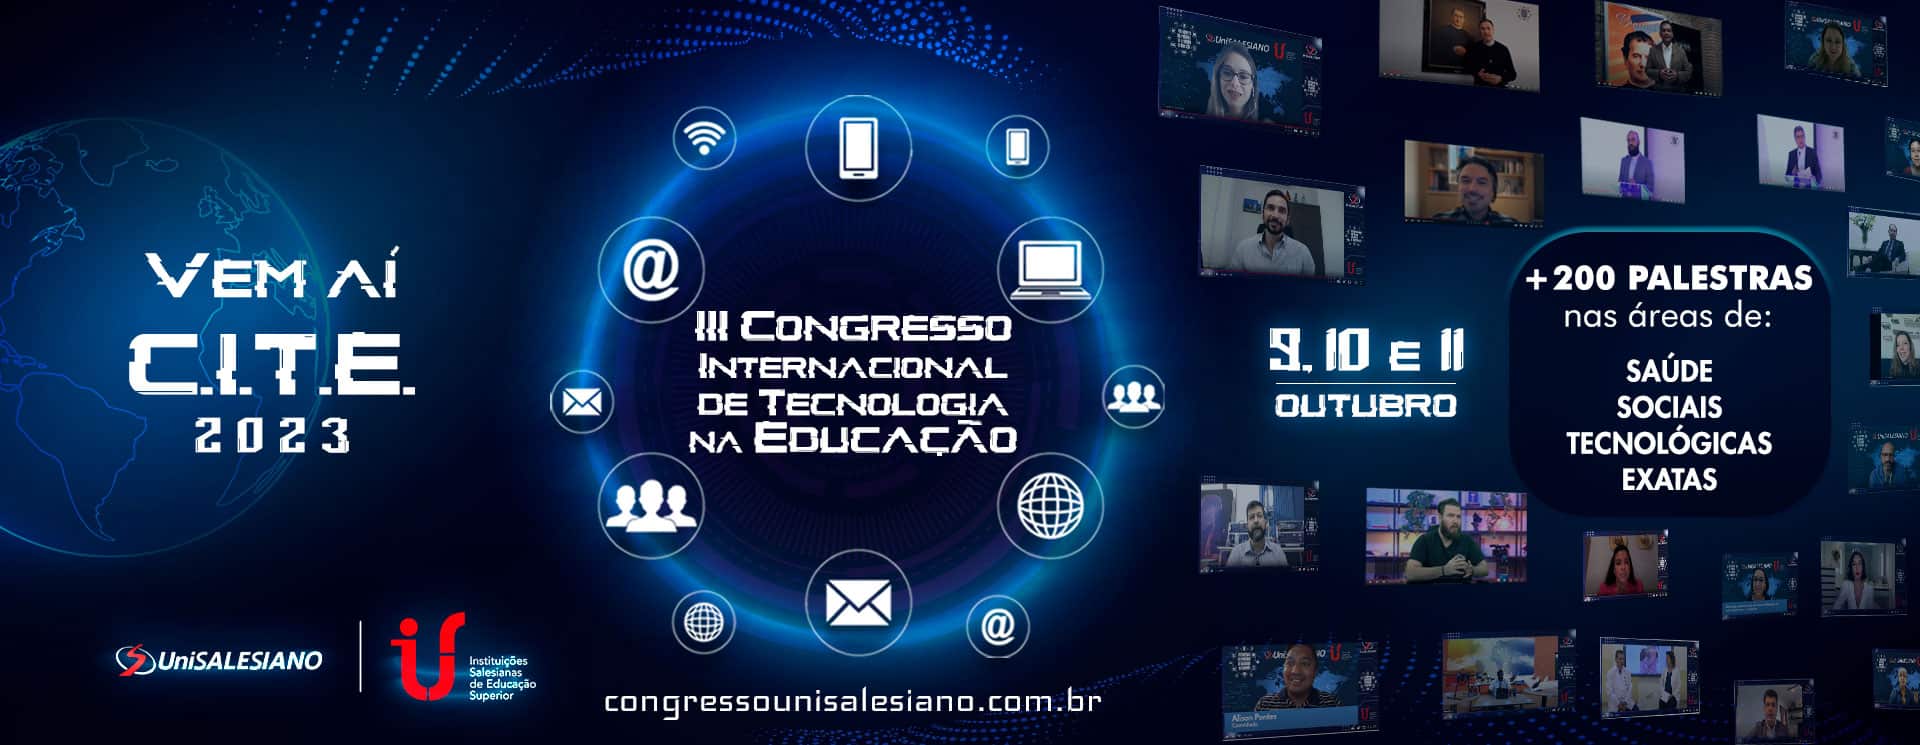 3er C.I.T.E. (Congreso Internacional de Tecnología en Educación) de UniSALESIANO